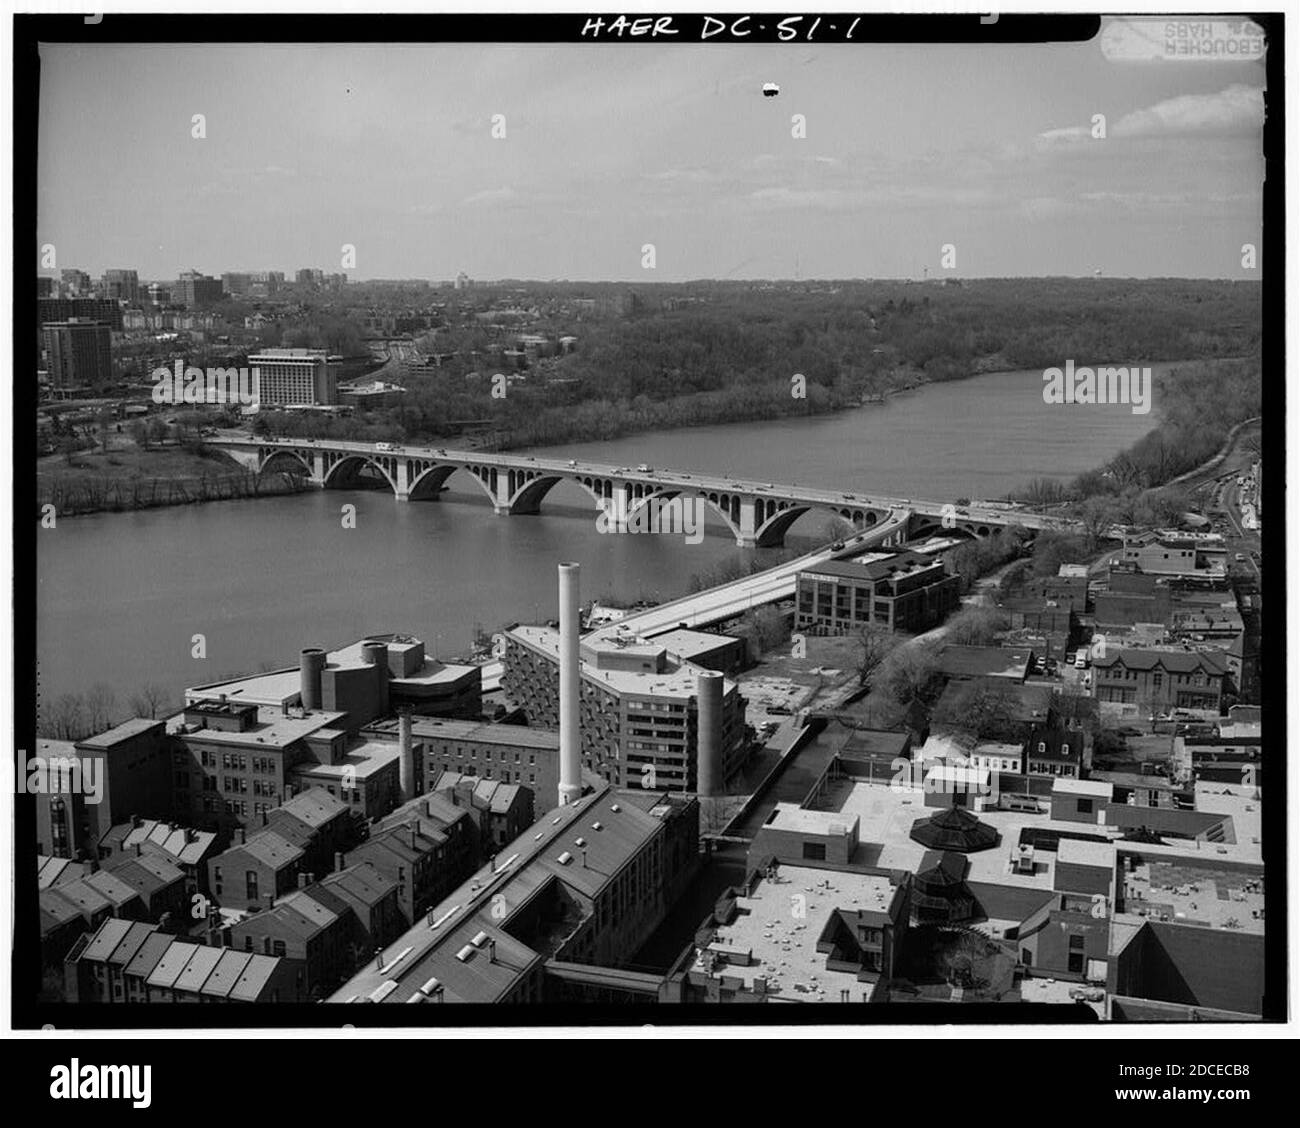 Key Bridge DC and Gergetown 1992. Stock Photo